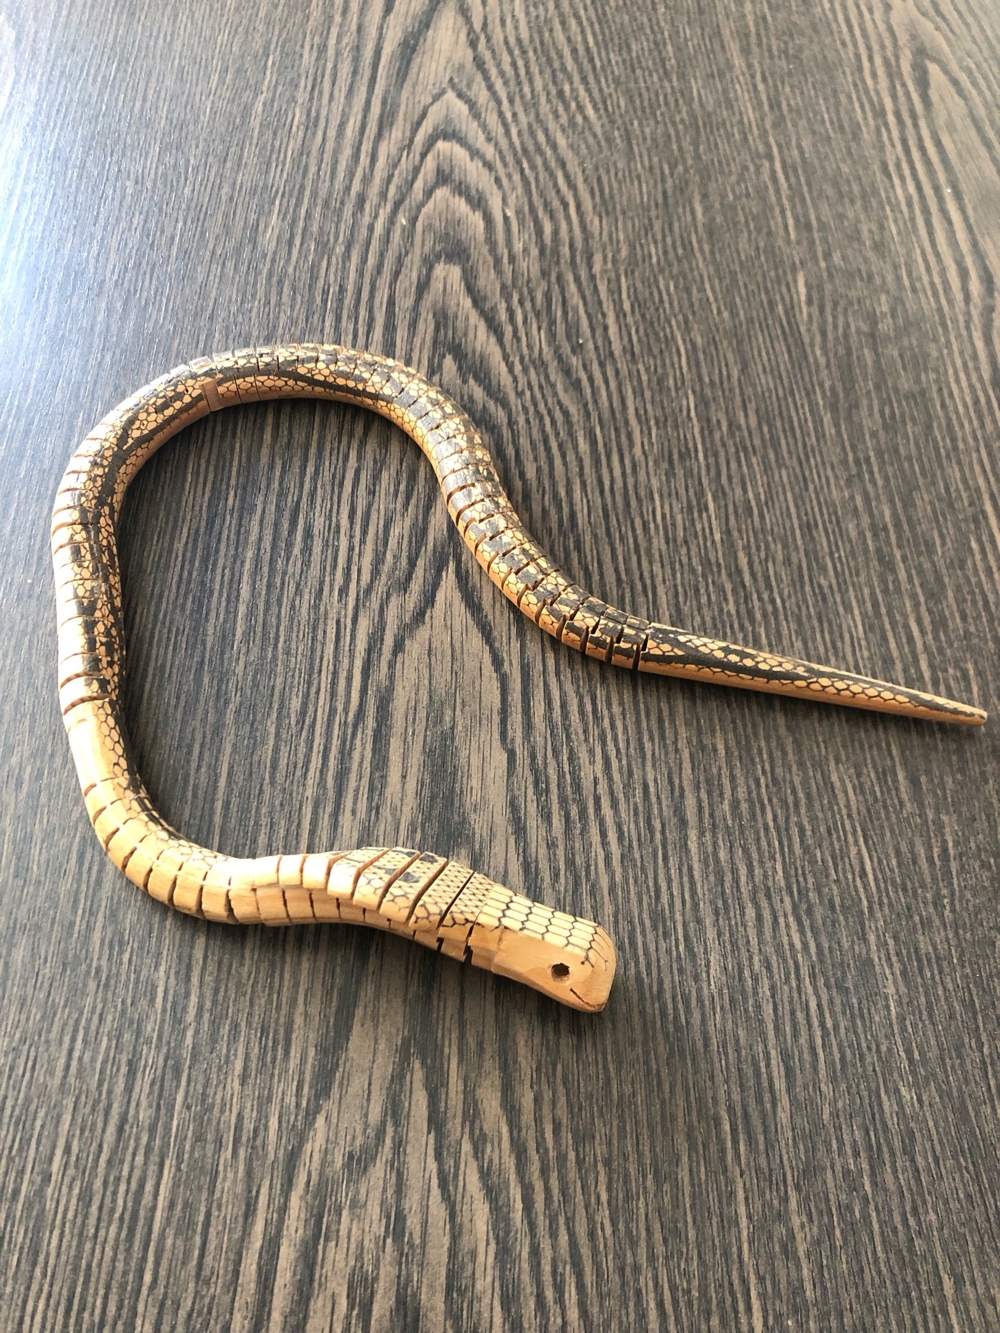 Kobra aus Holz